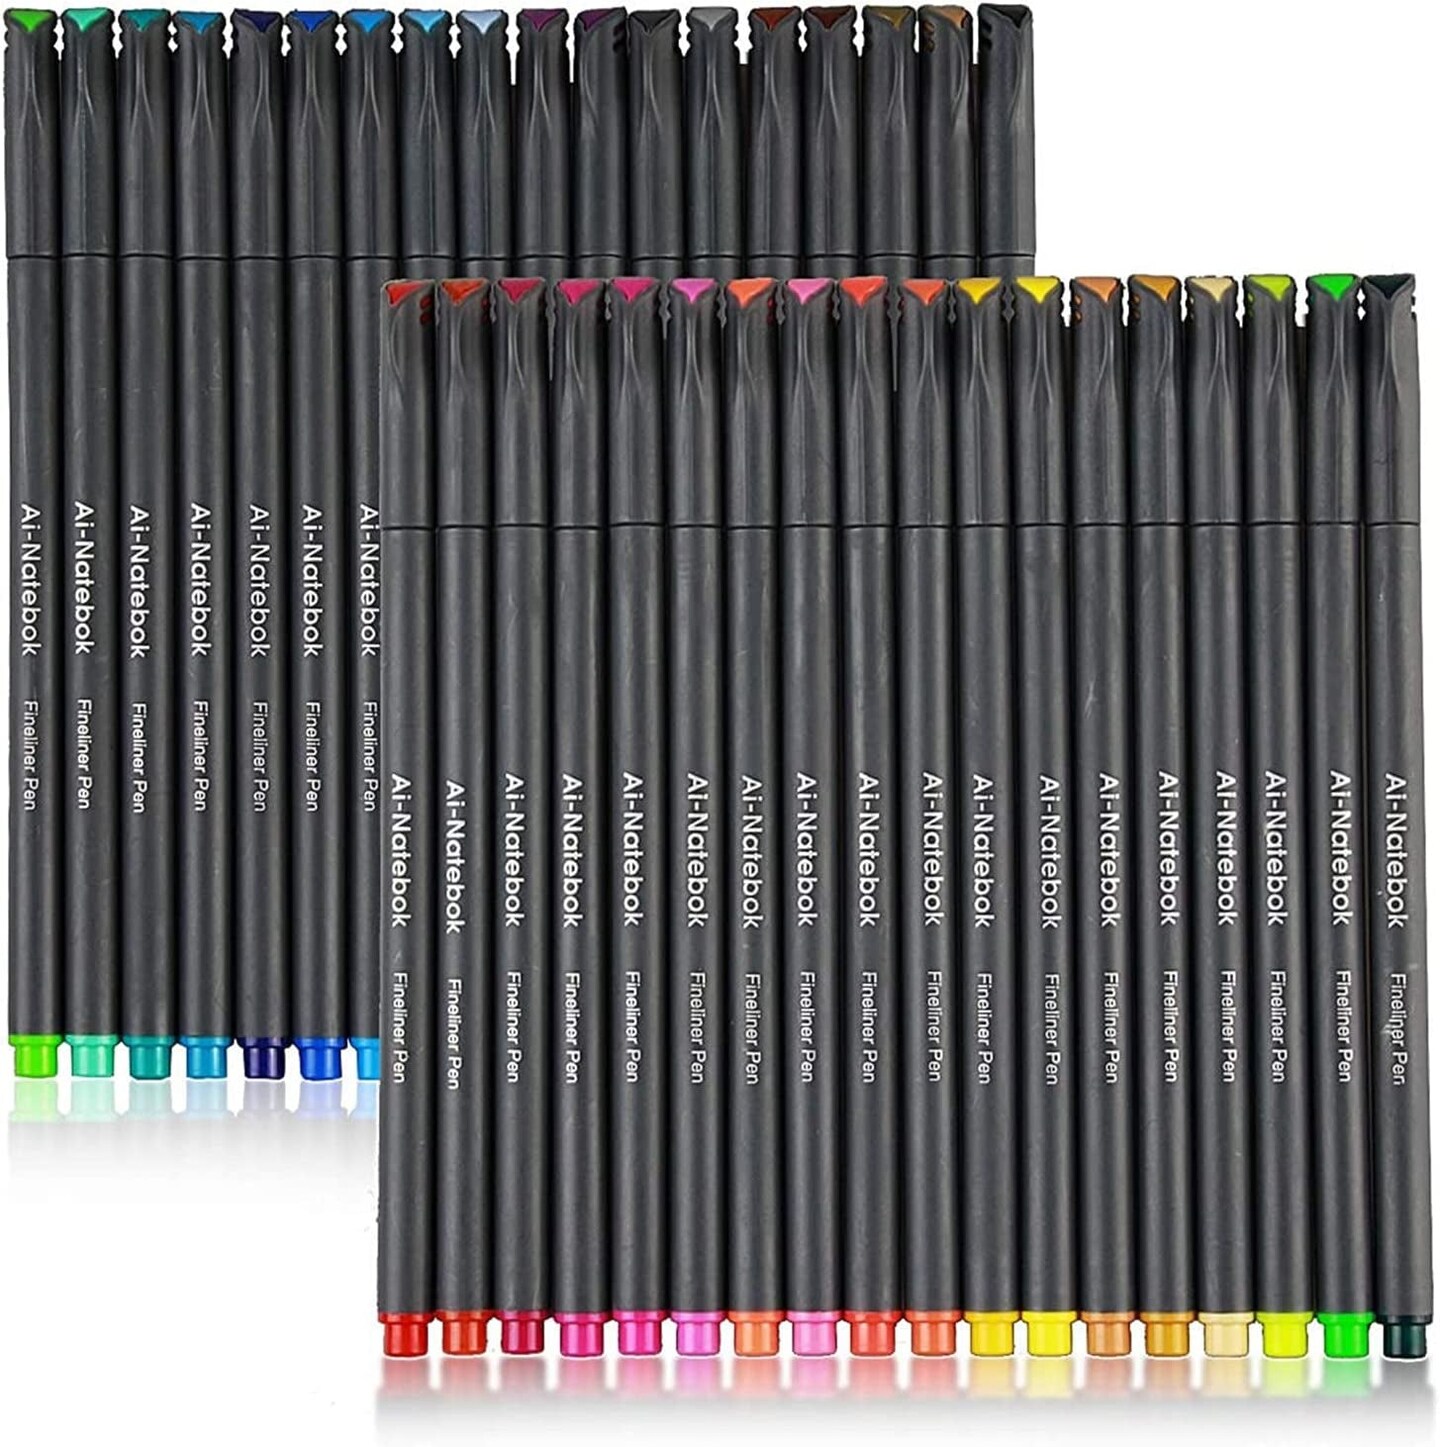 Fineliner Colored Pens Bullet Journal Planner Pen, Porous Fine